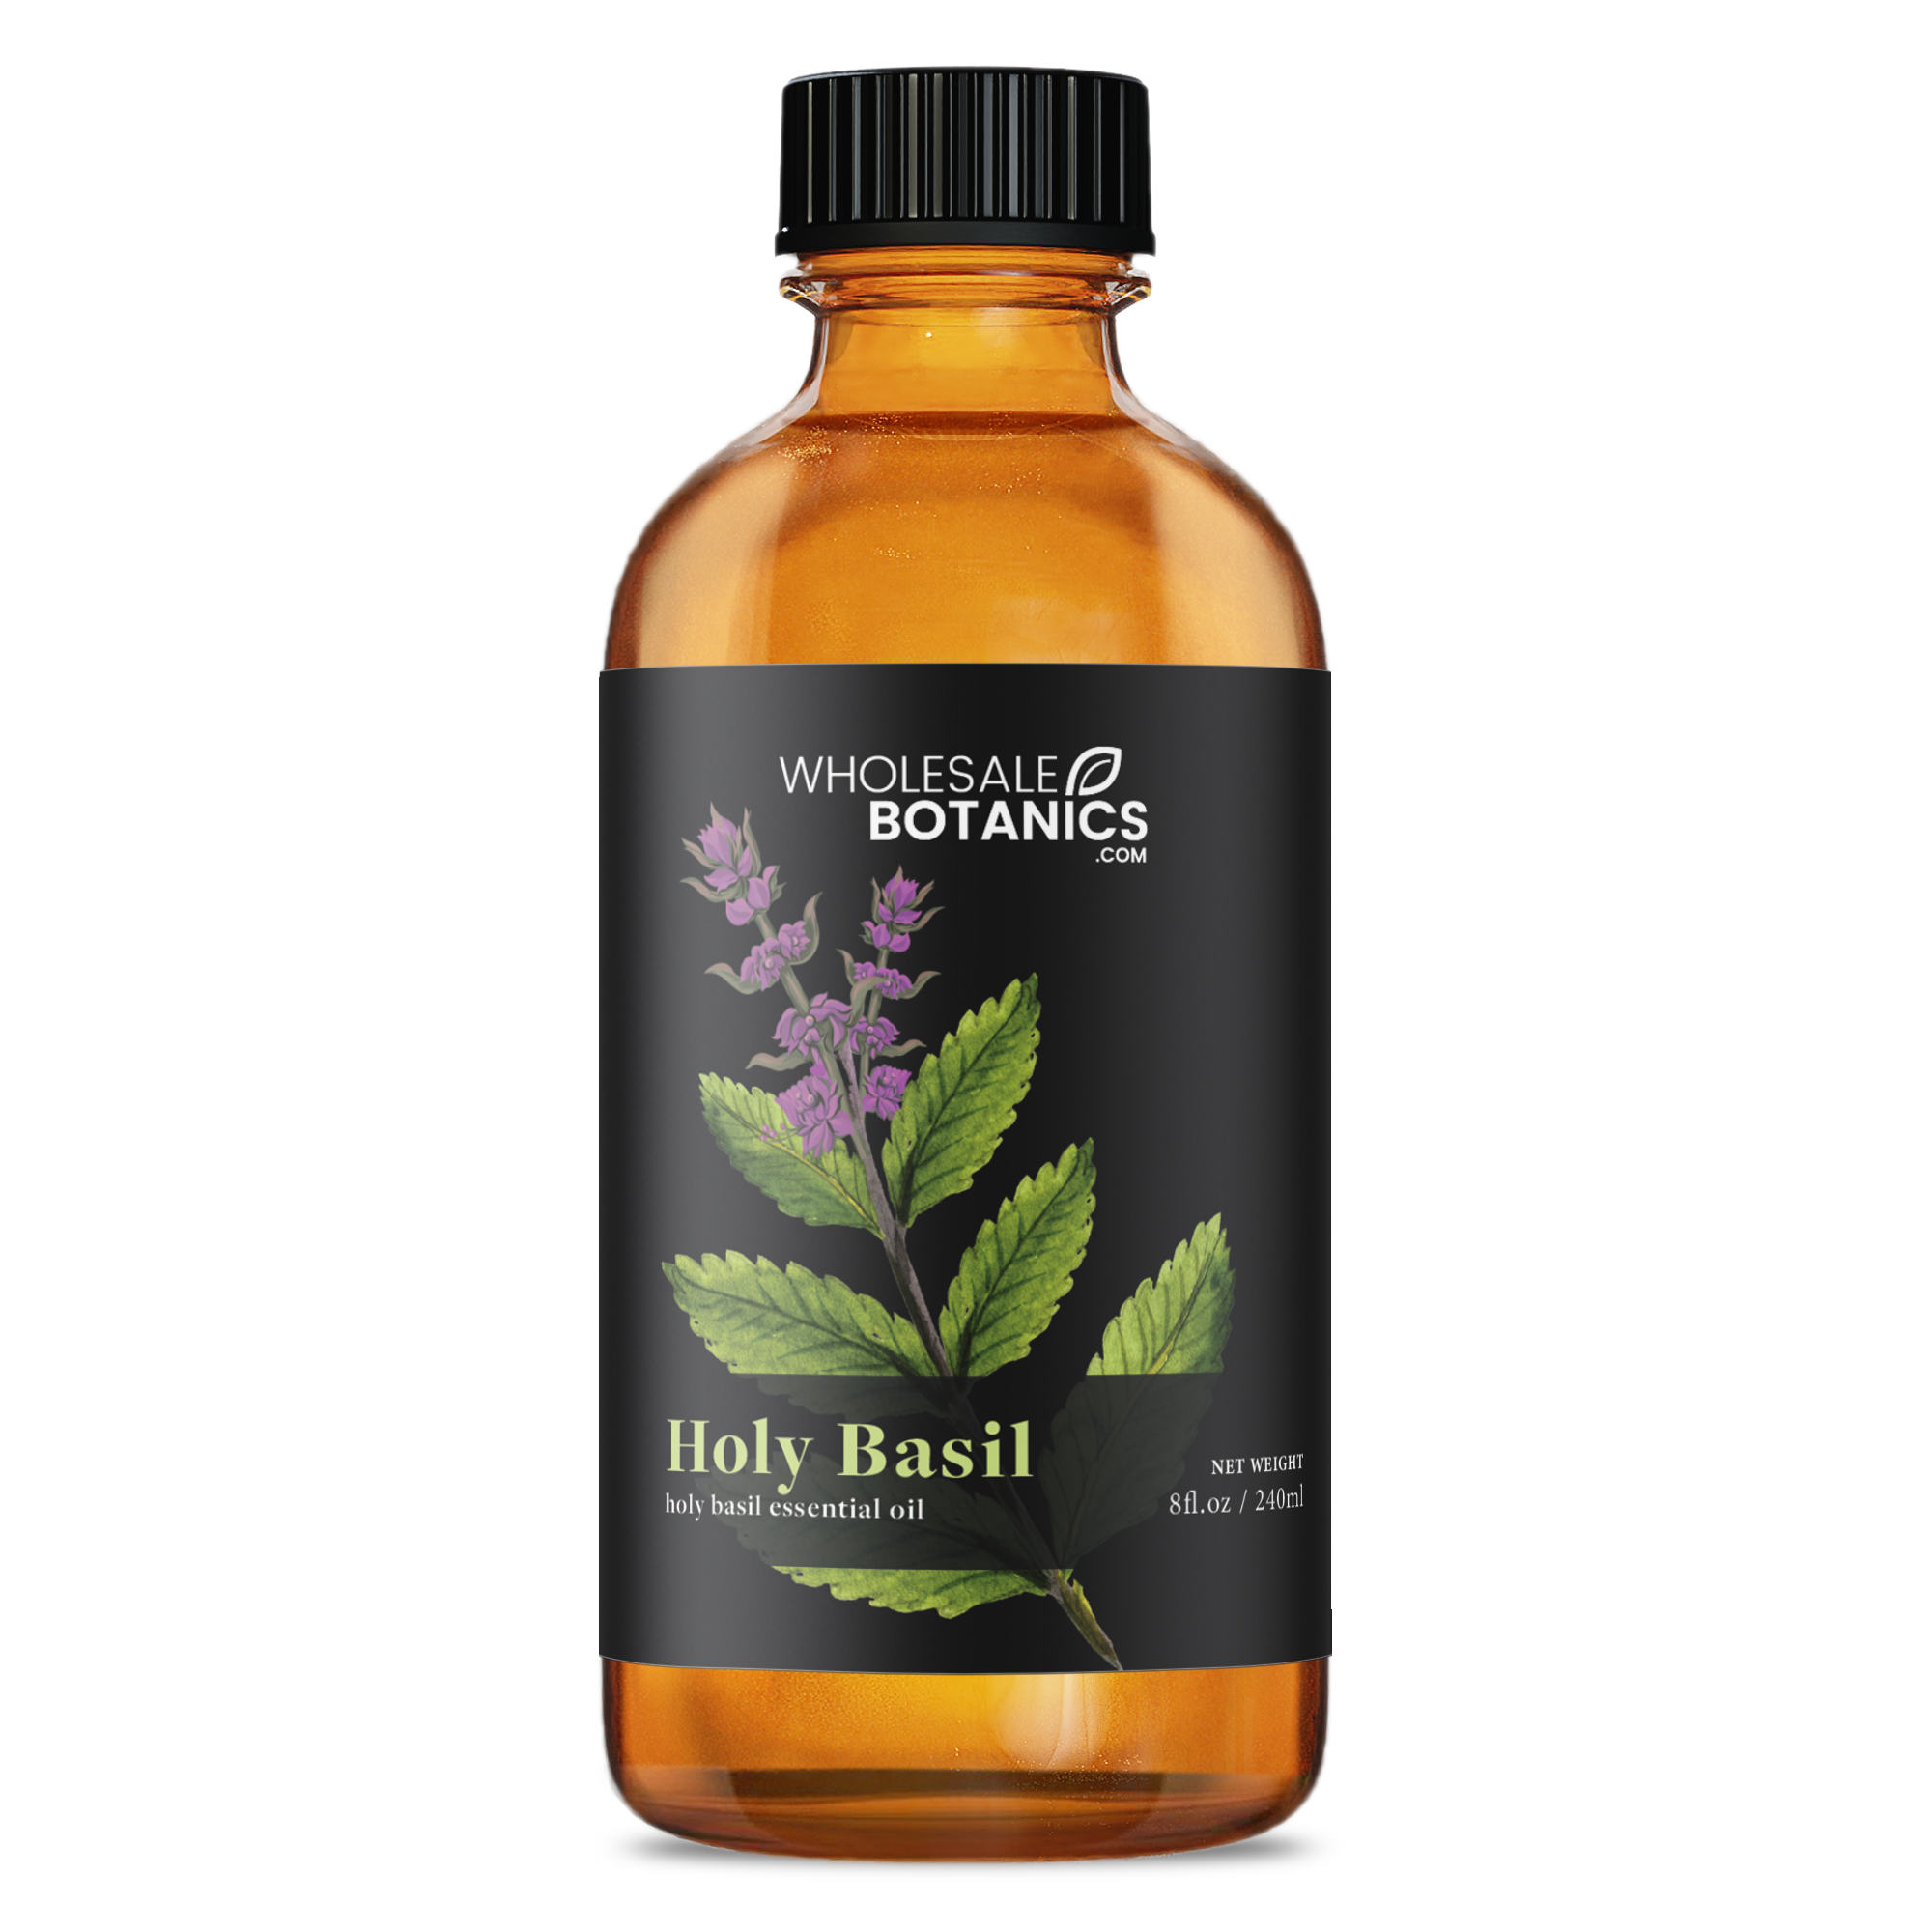 Holy Basil Essential Oil